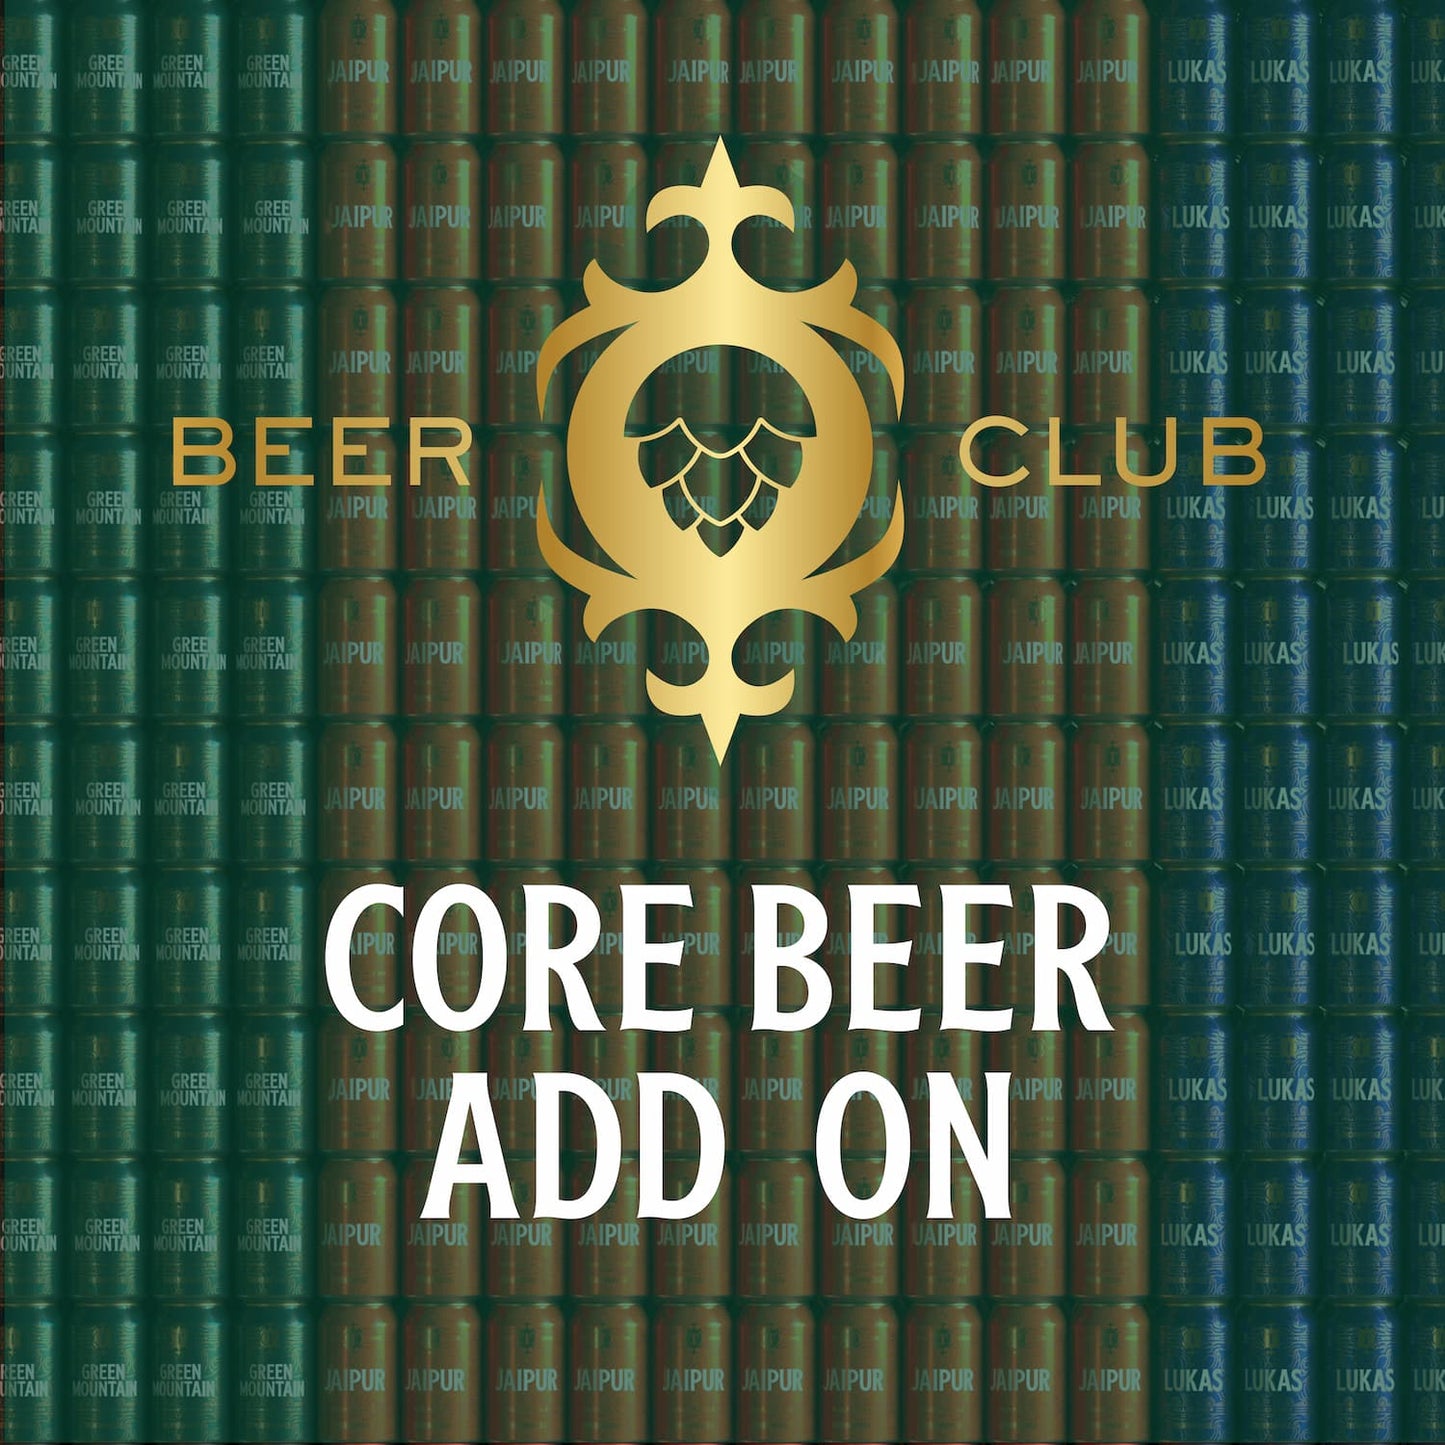 Beer Club Core Beer Add On Bundle - 6 x 330ml cans Beer - Subscription Box Thornbridge